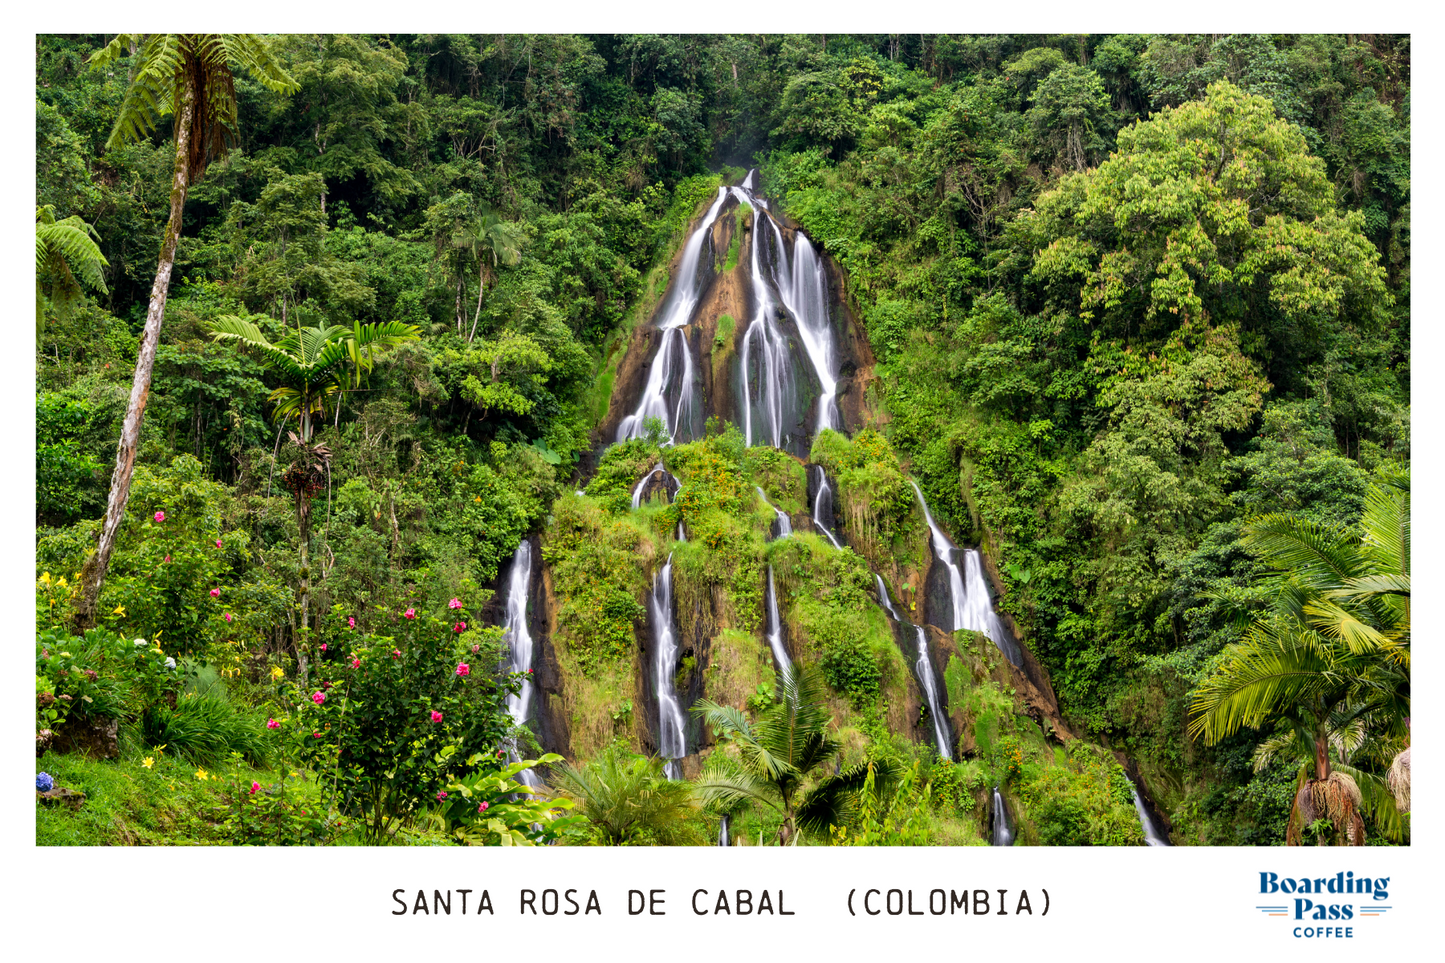 Santa Rosa de Cabal (Colombia) - DECAF - Medium-Dark Roast